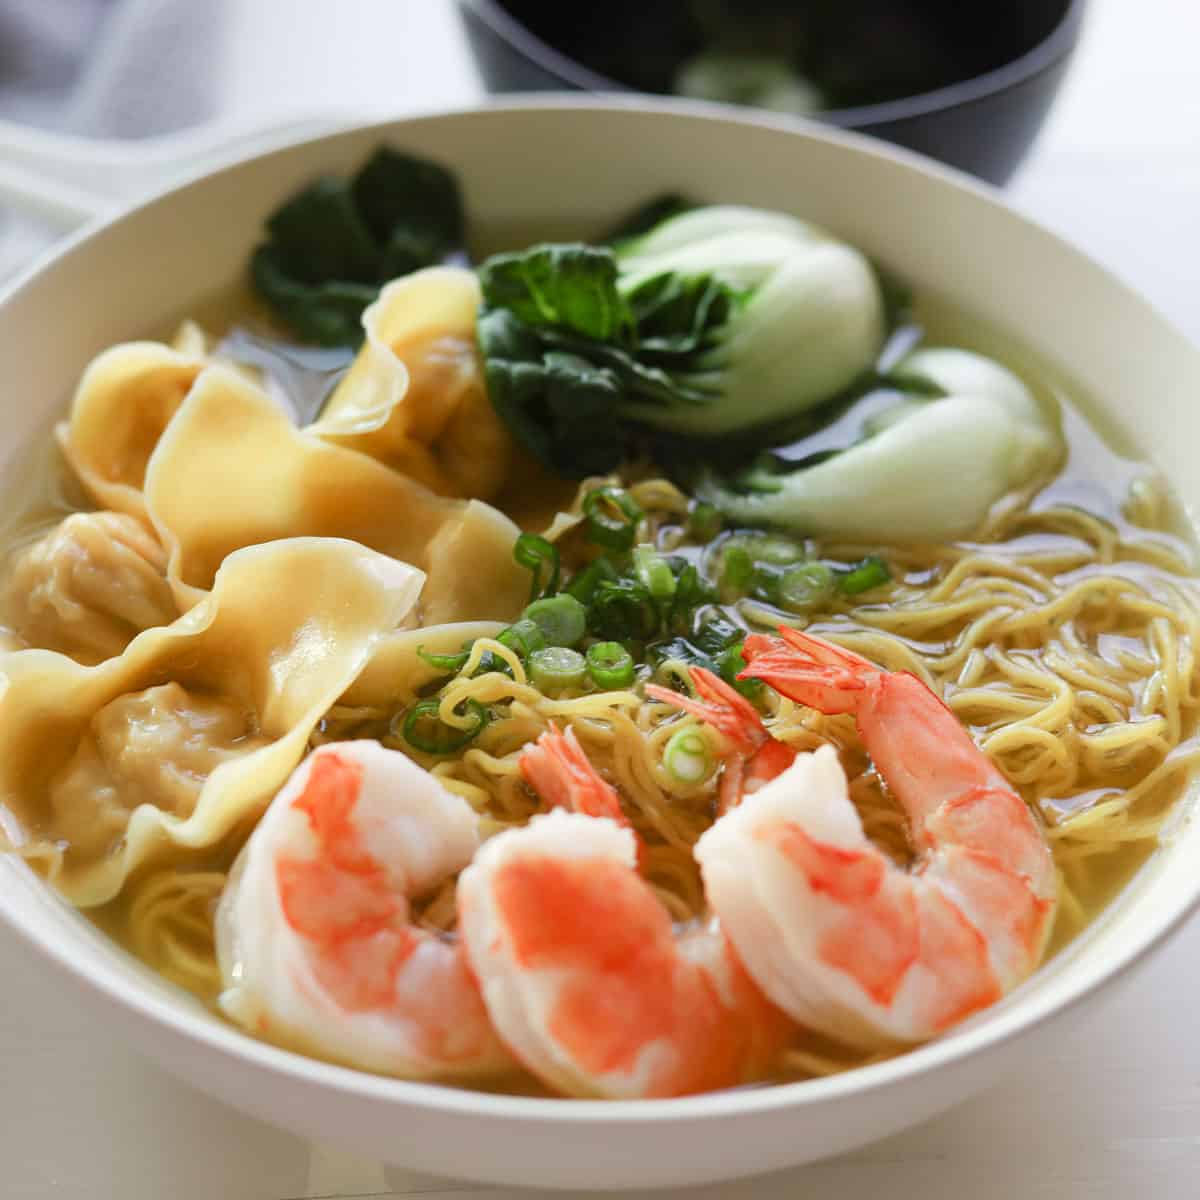 Bowl of egg noodle soup with wontons, vegetables and shrimp. 